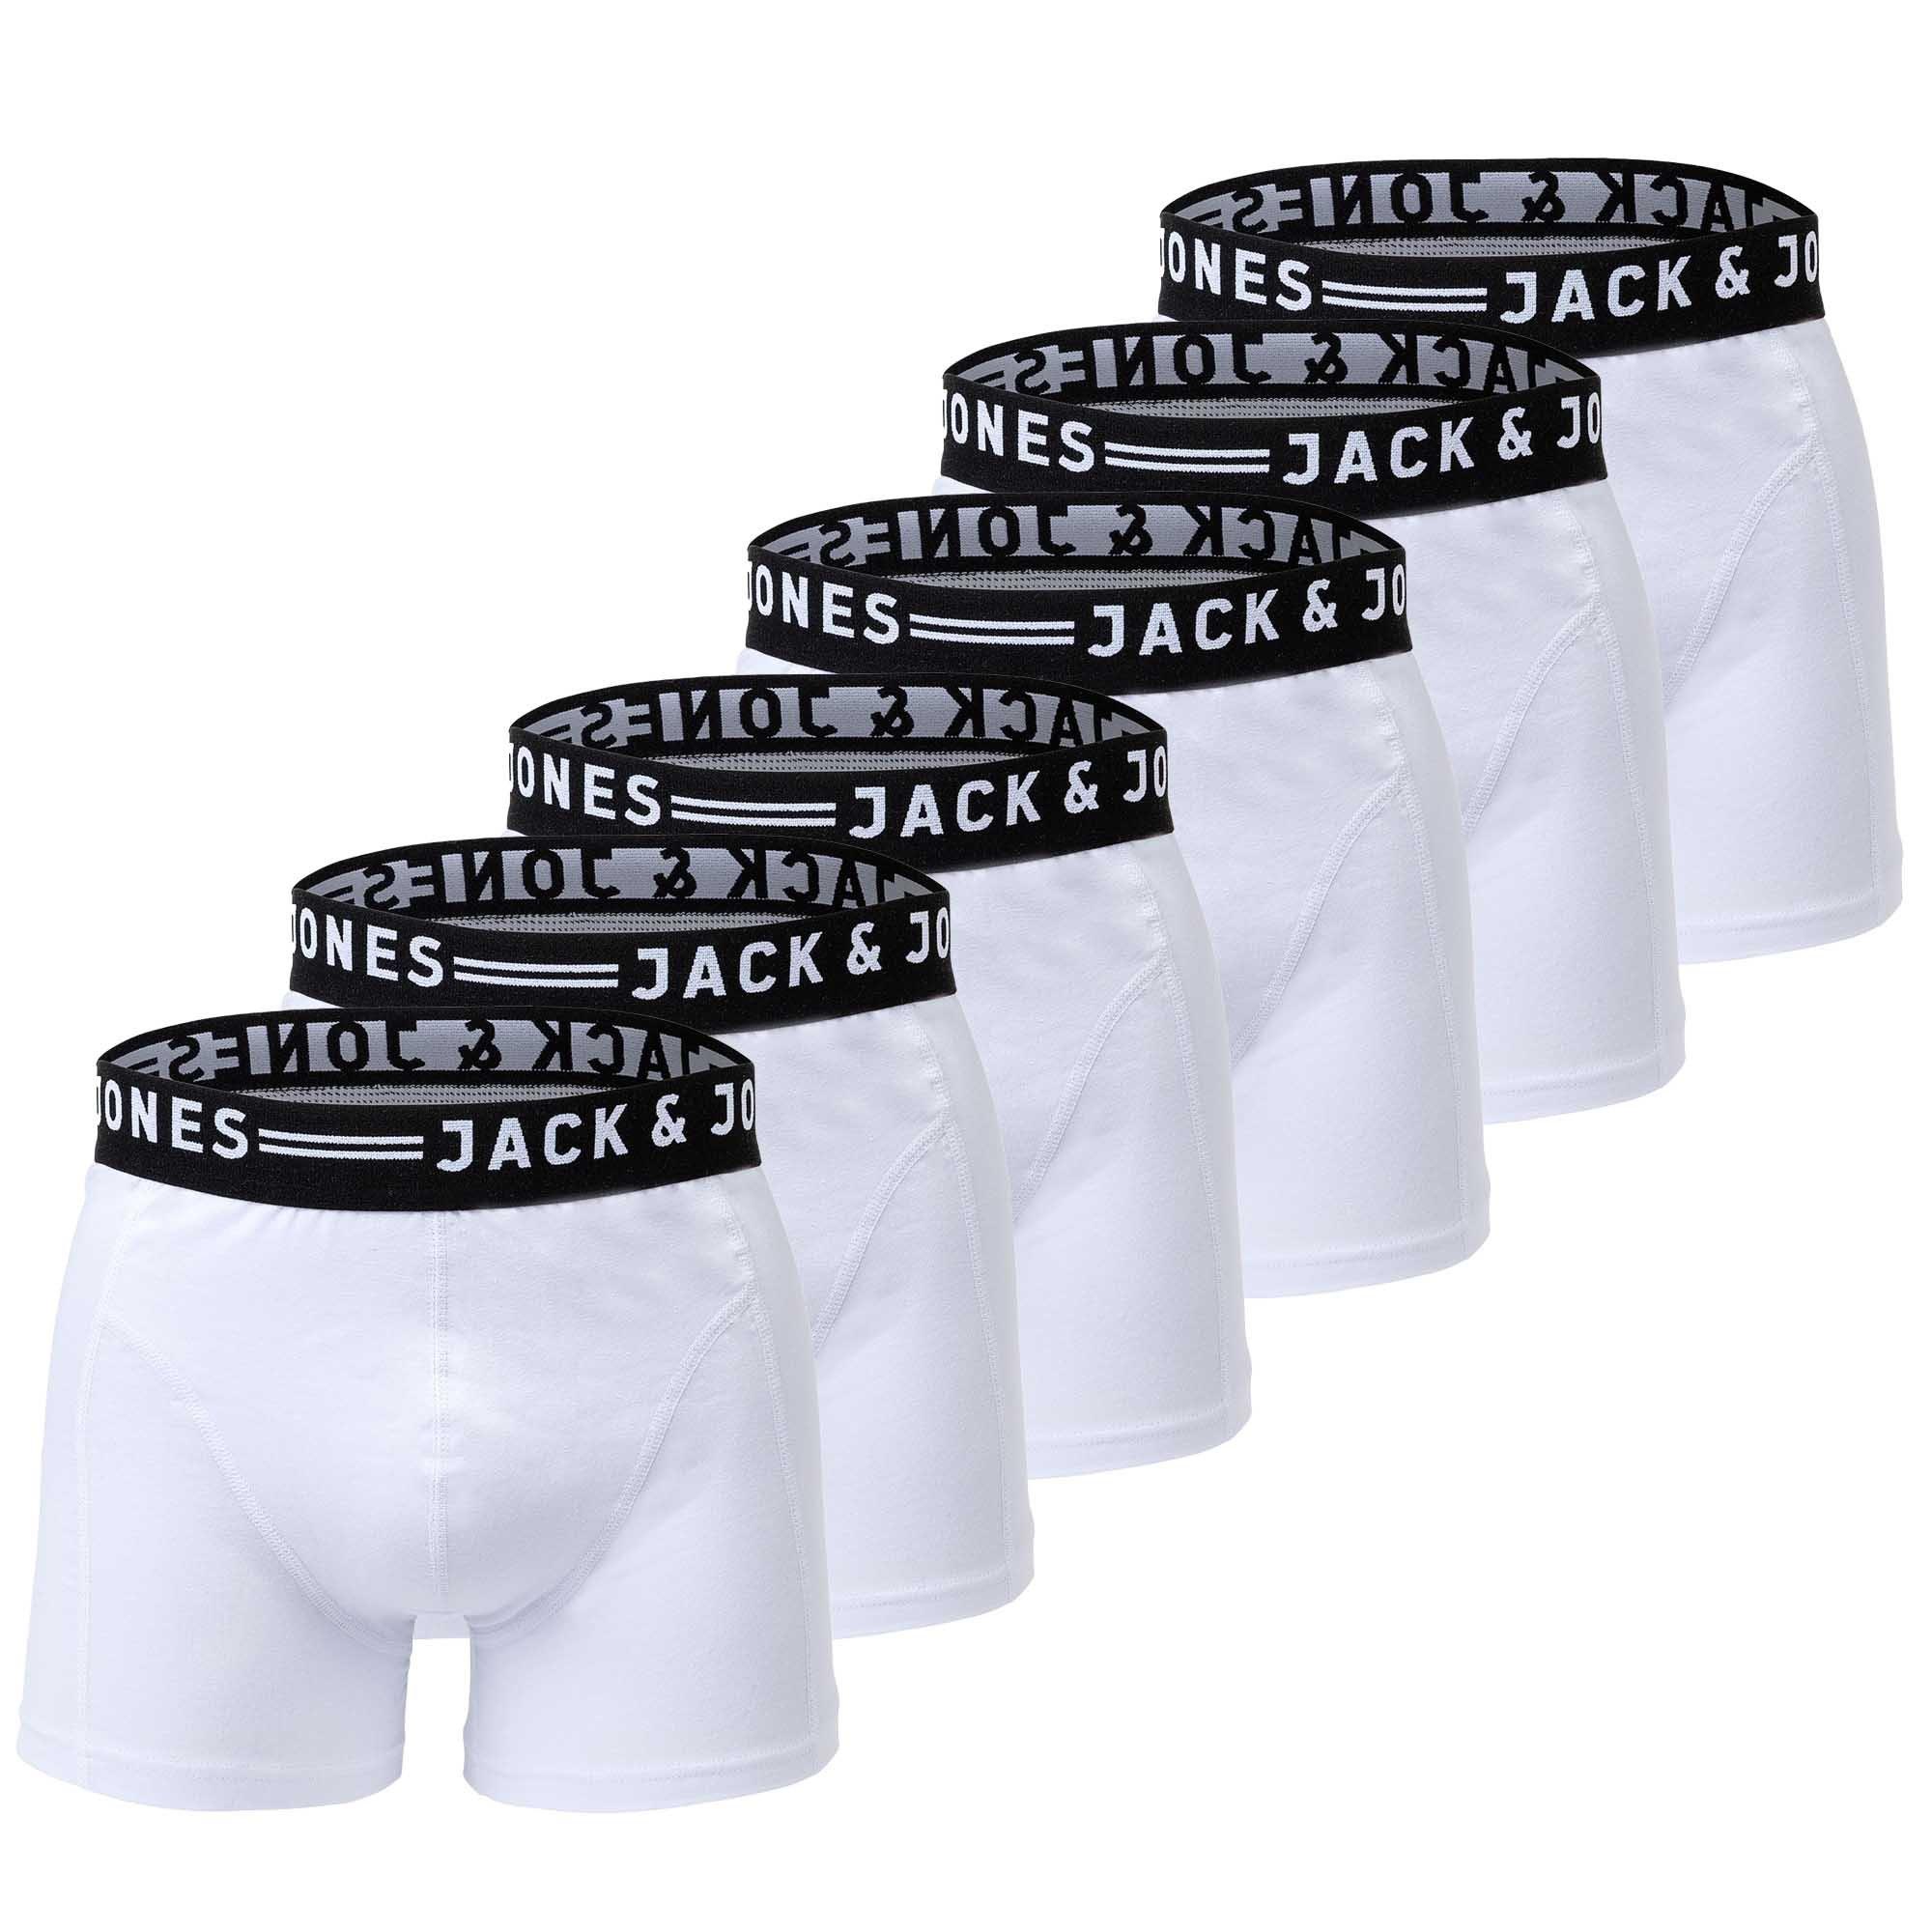 JACK & JONES  Boxer Shorts, 6er Pack 